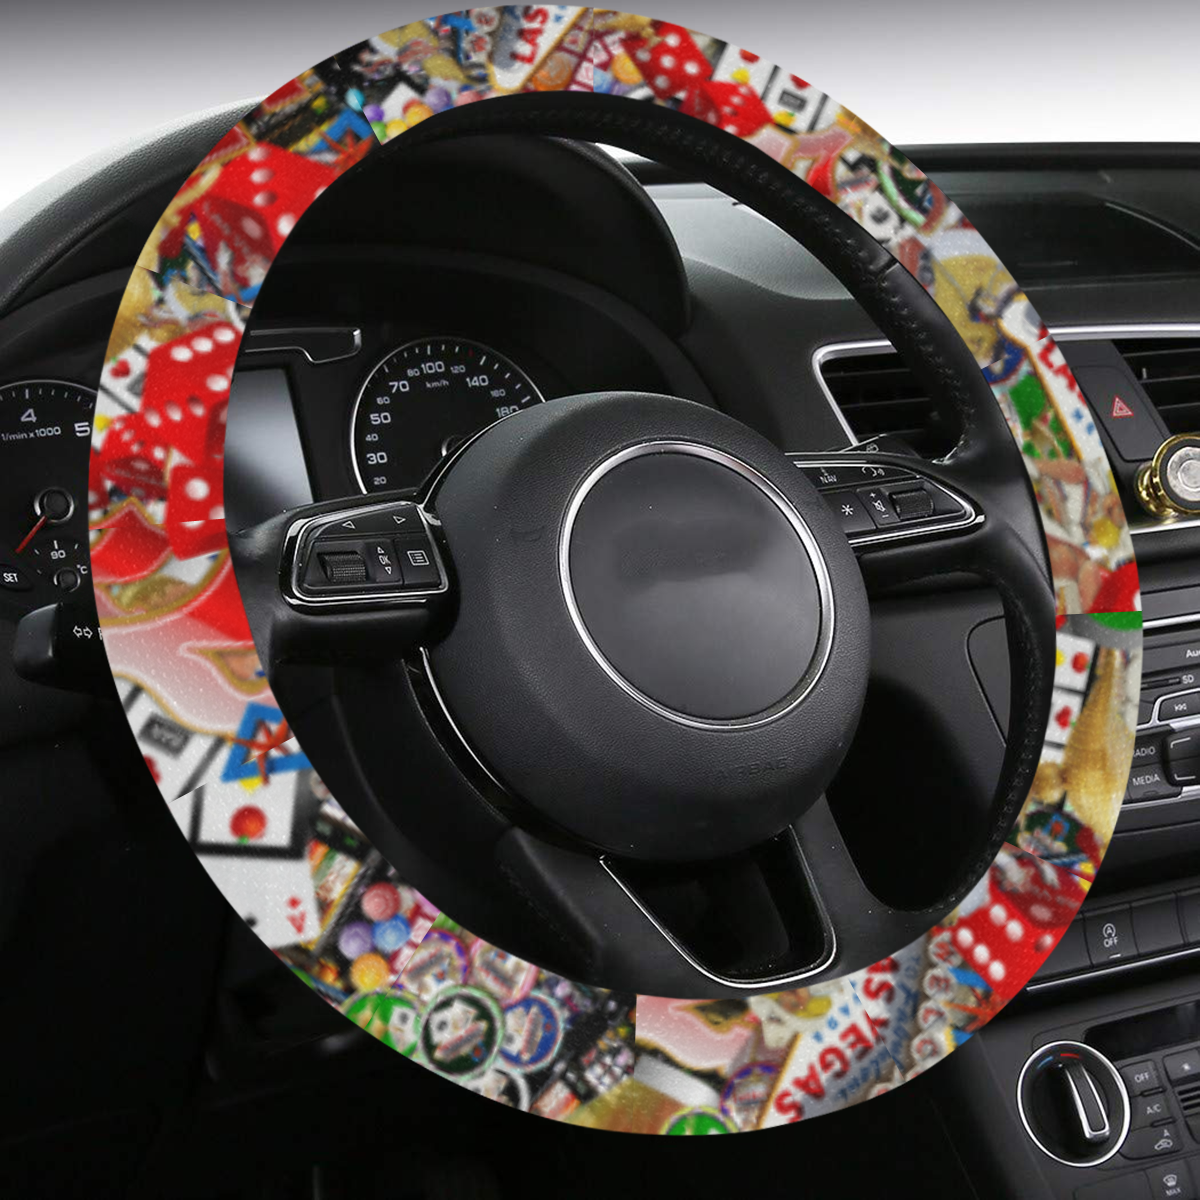 Las Vegas Icons Gamblers Delight Steering Wheel Cover with Anti-Slip Insert